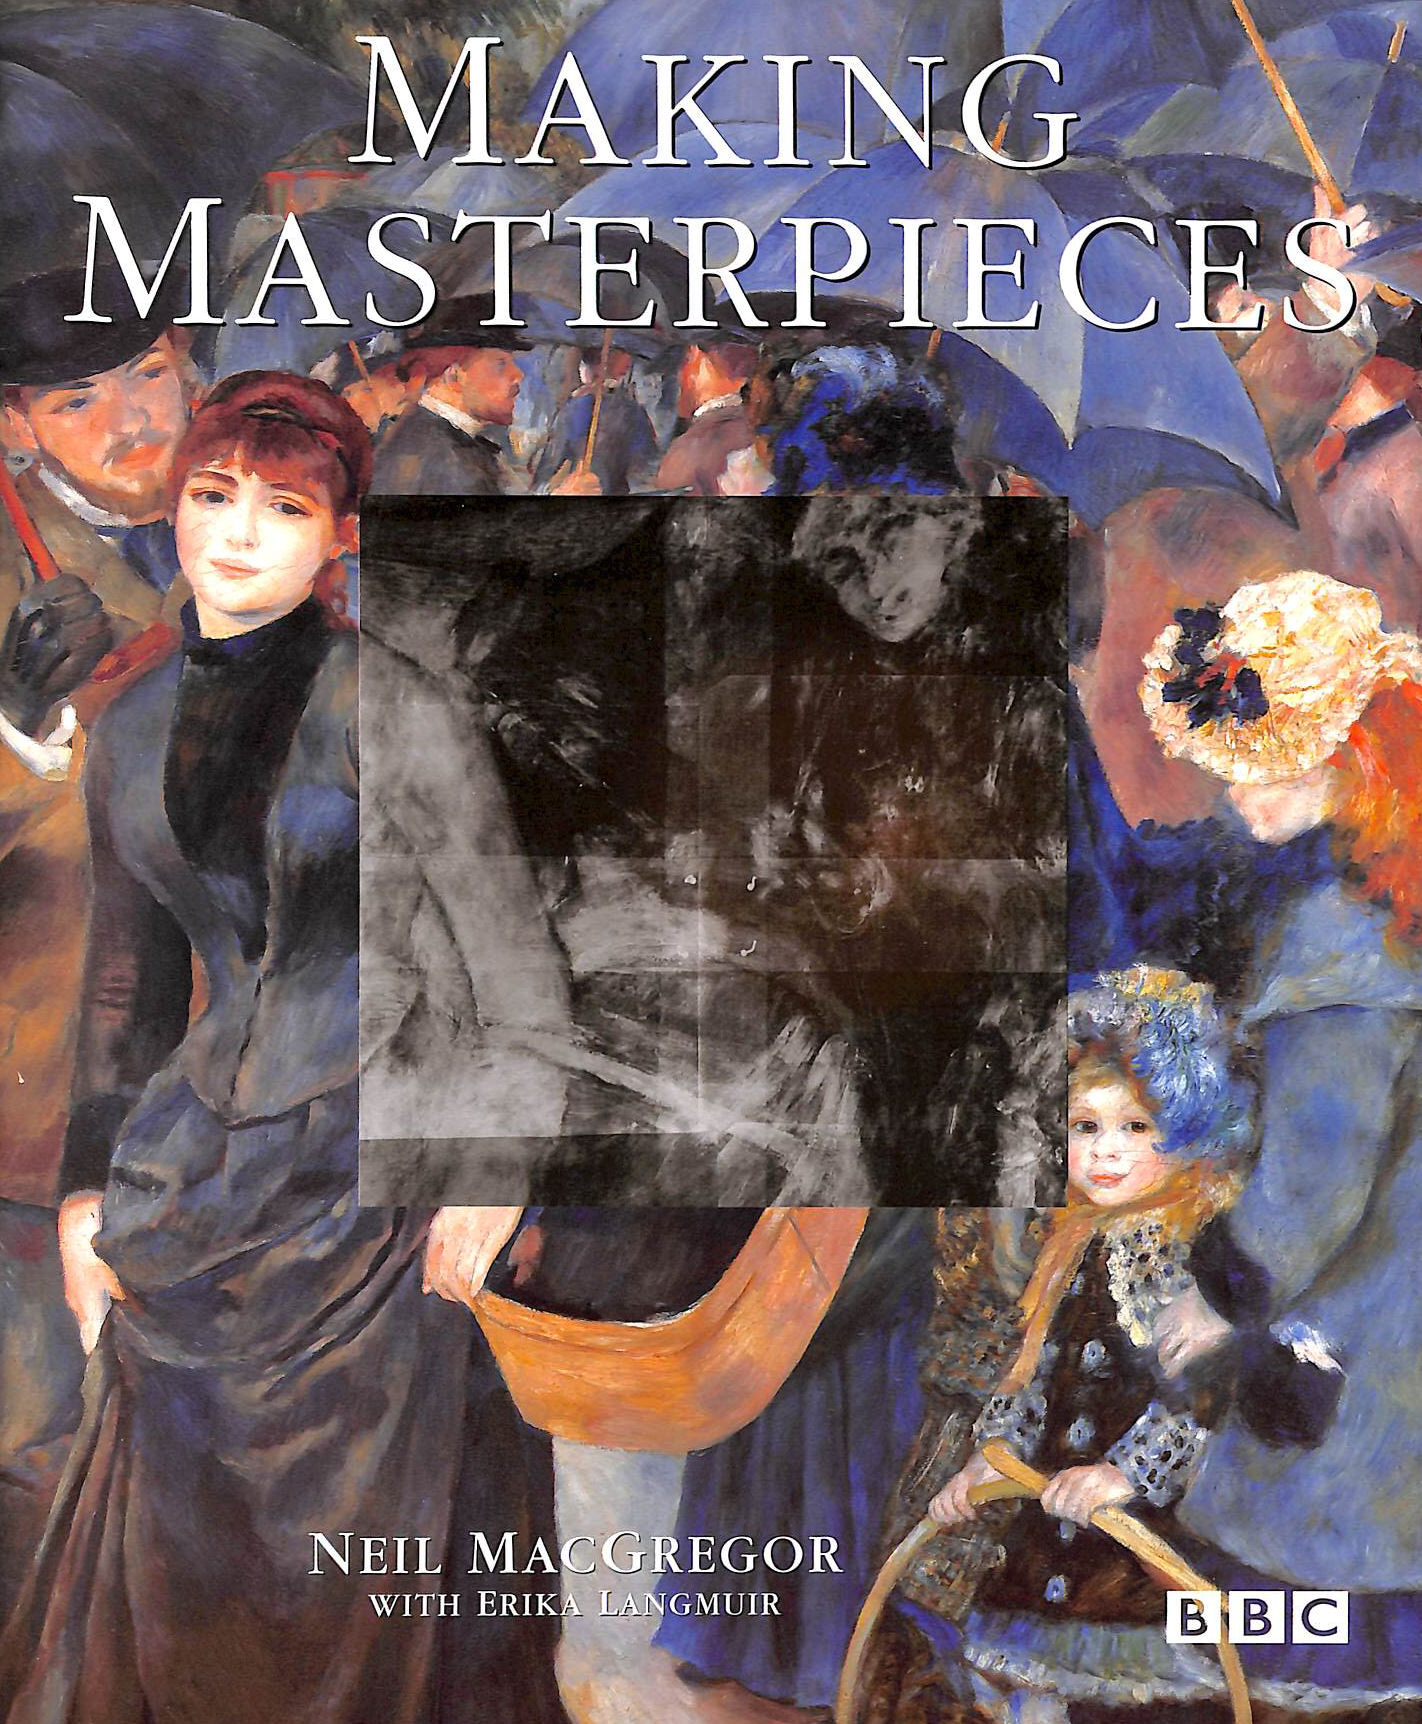 NEIL MACGREGOR - Making Masterpieces